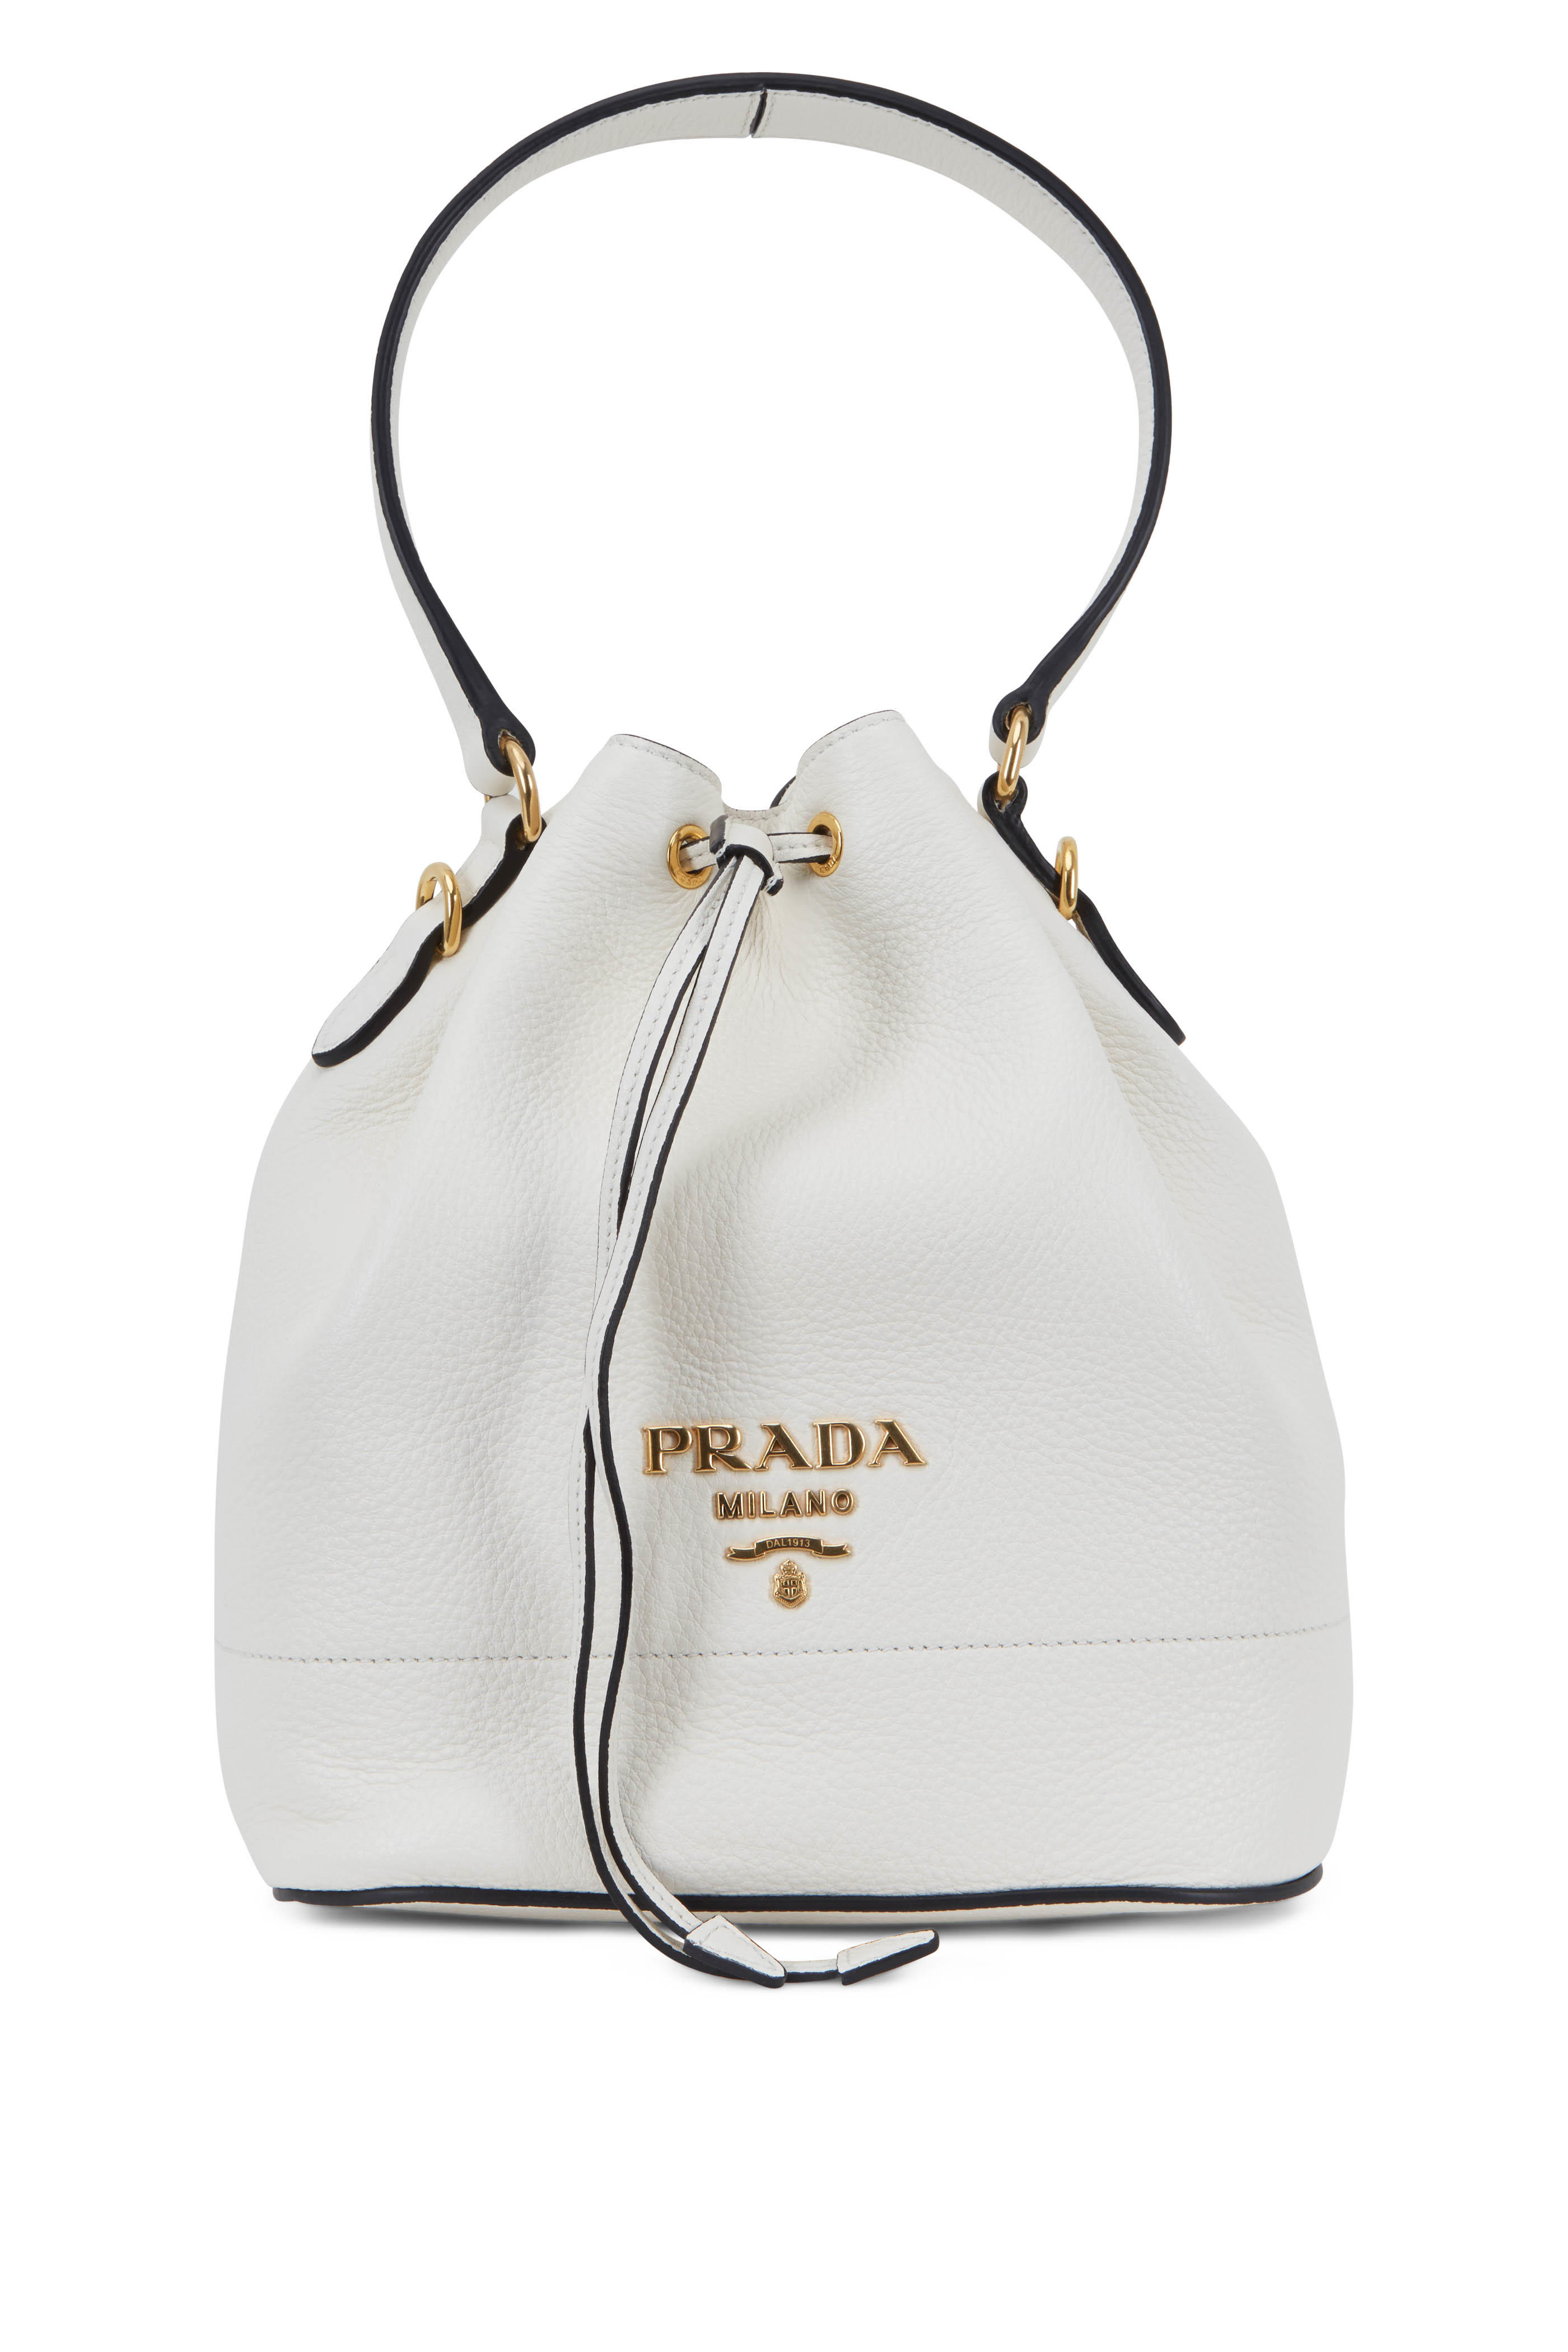 prada white bag